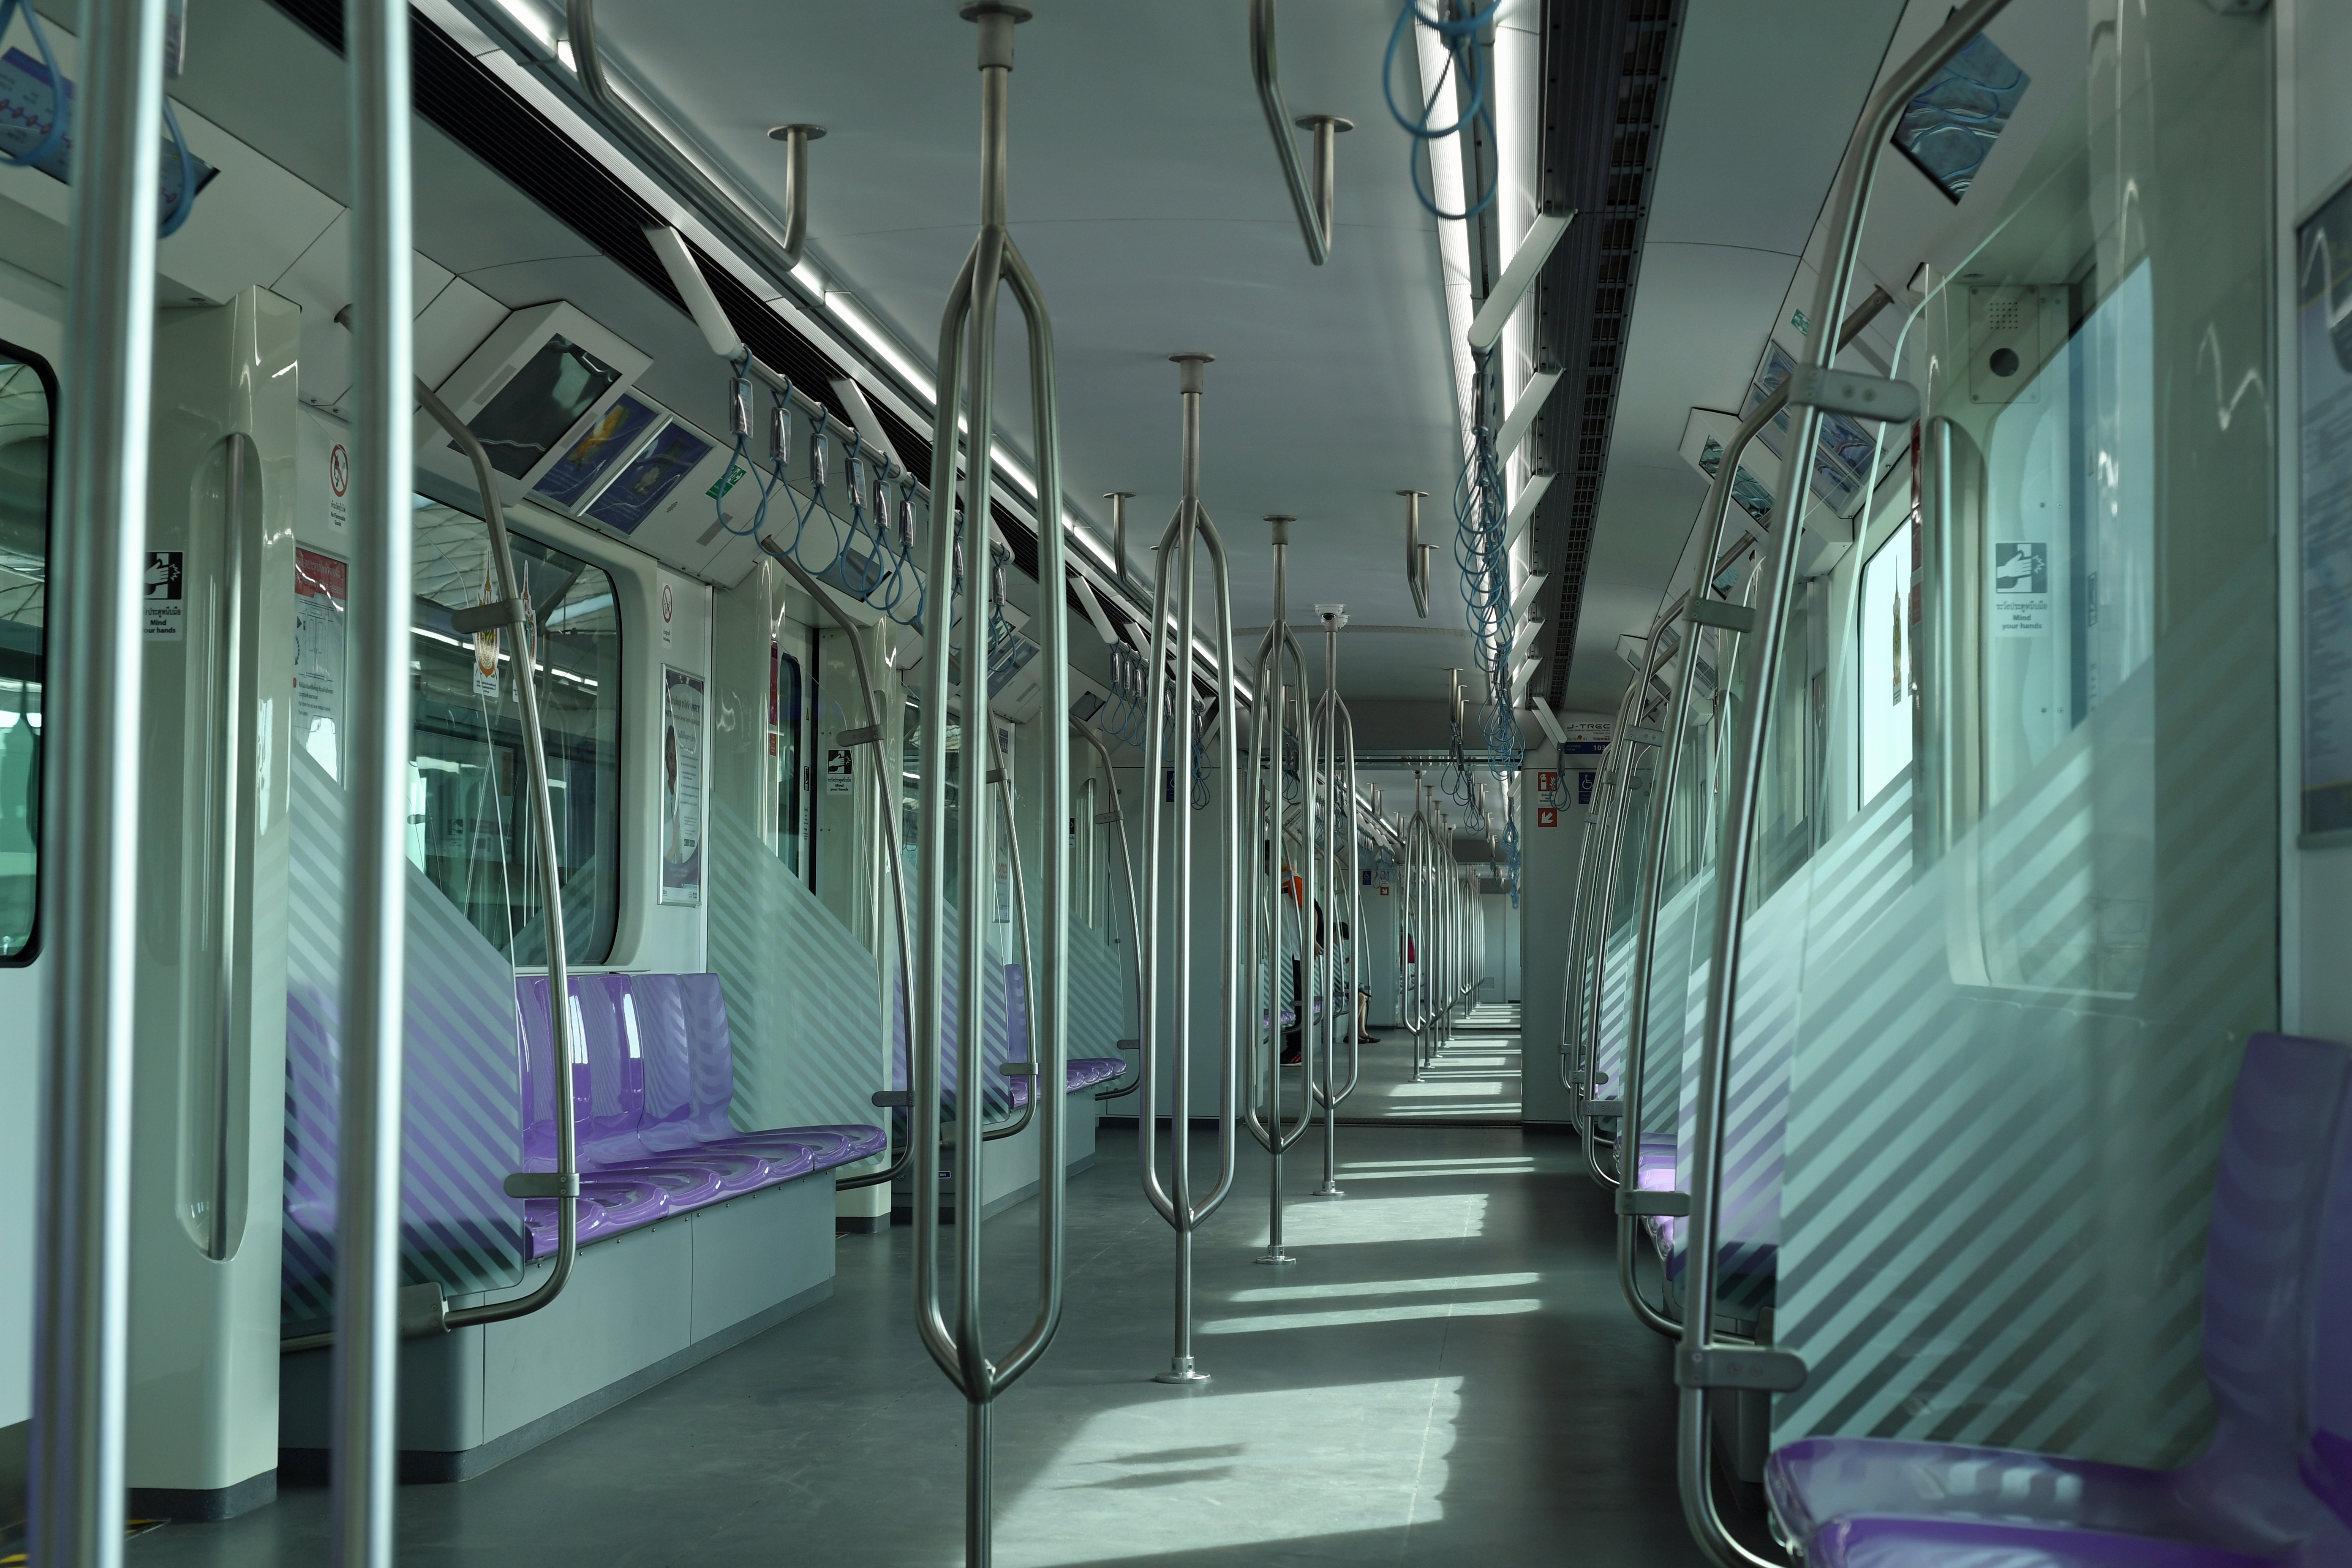 dg262555-interior-purple-line-train-khlong-bang-phai-thailand-11-1-16